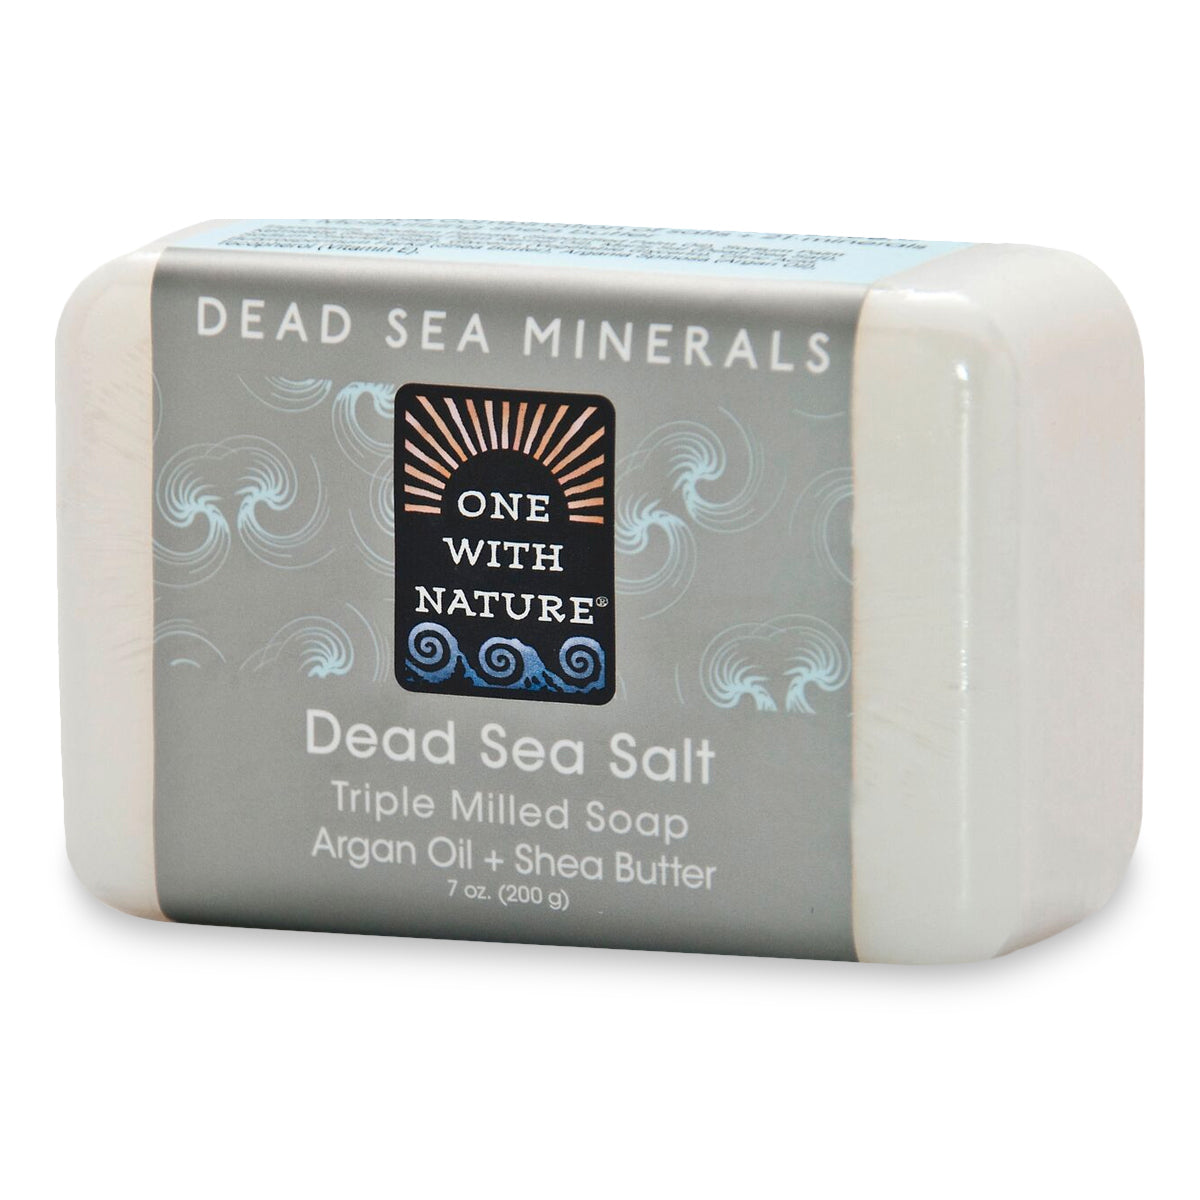 Primary image of Dead Sea Mineral Soap - Dead Sea Salt